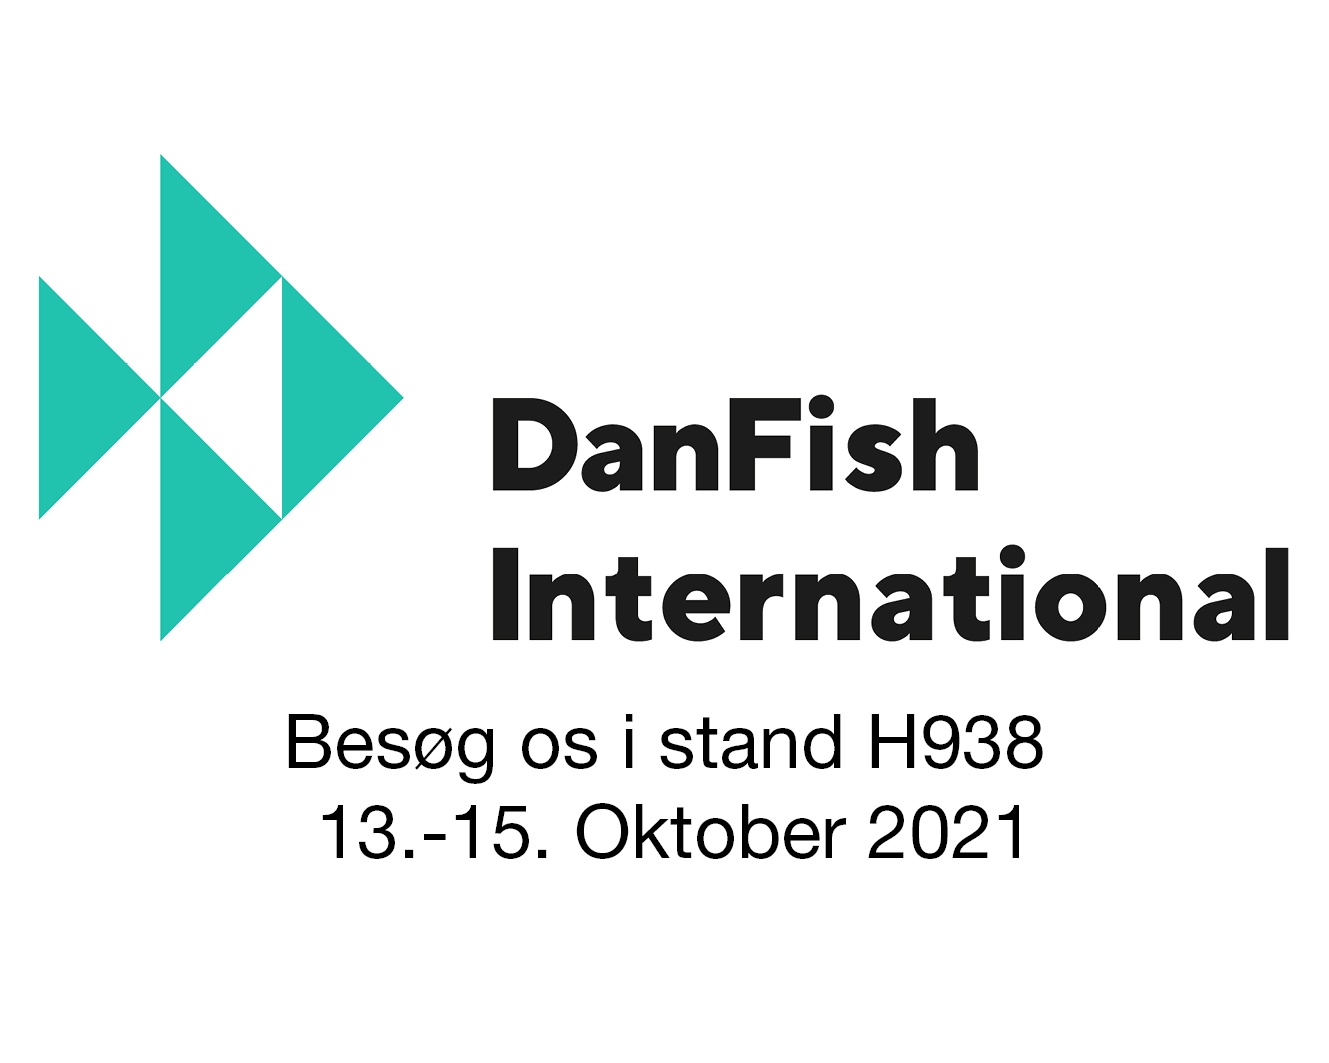 Dunlop Hiflex participate at DanFish International 2021